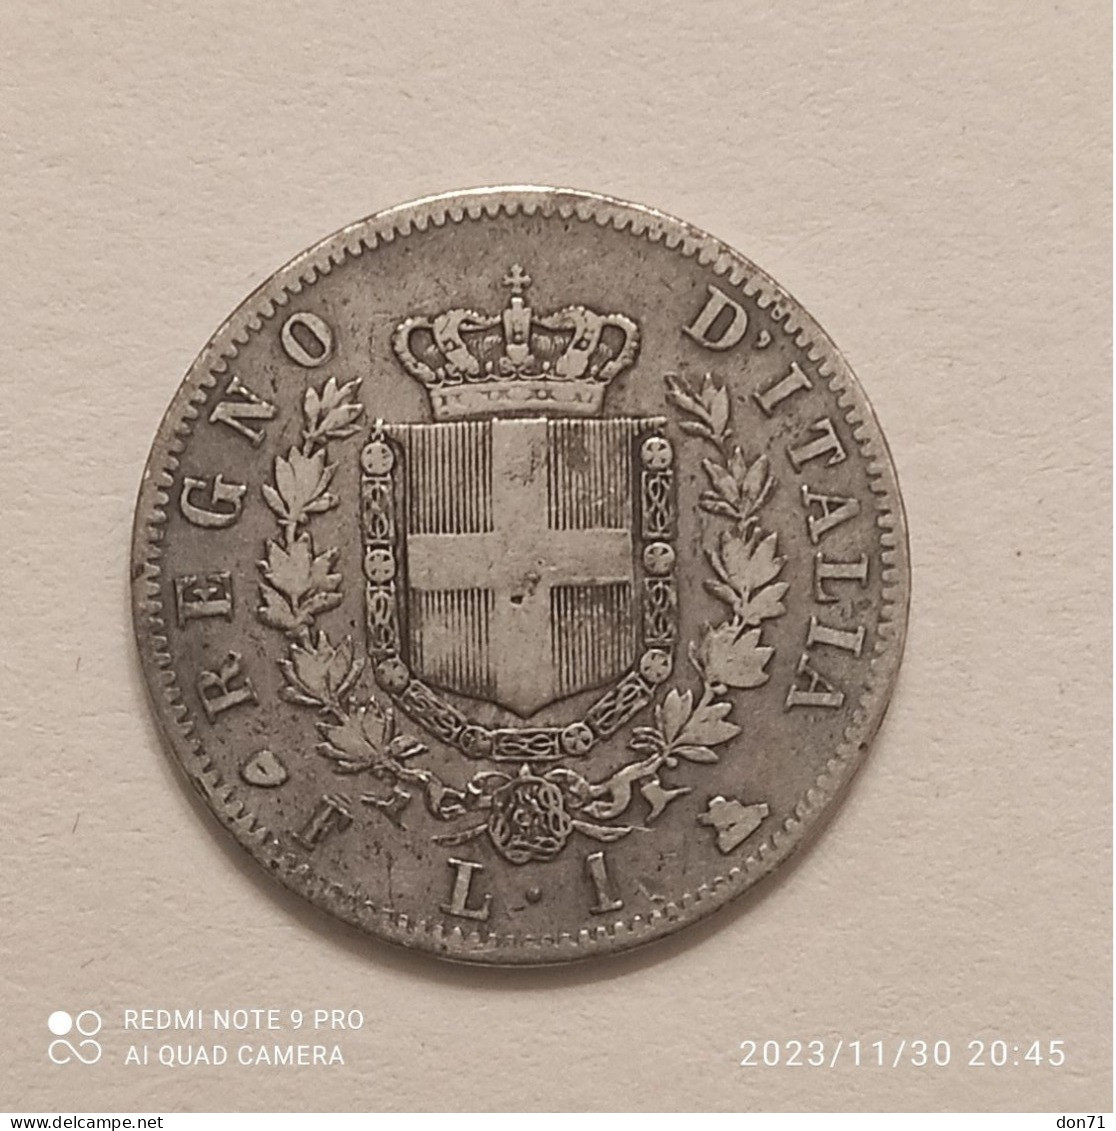 Italia Regno - 1 Lira 1861 (F) - 1861-1878 : Victor Emmanuel II